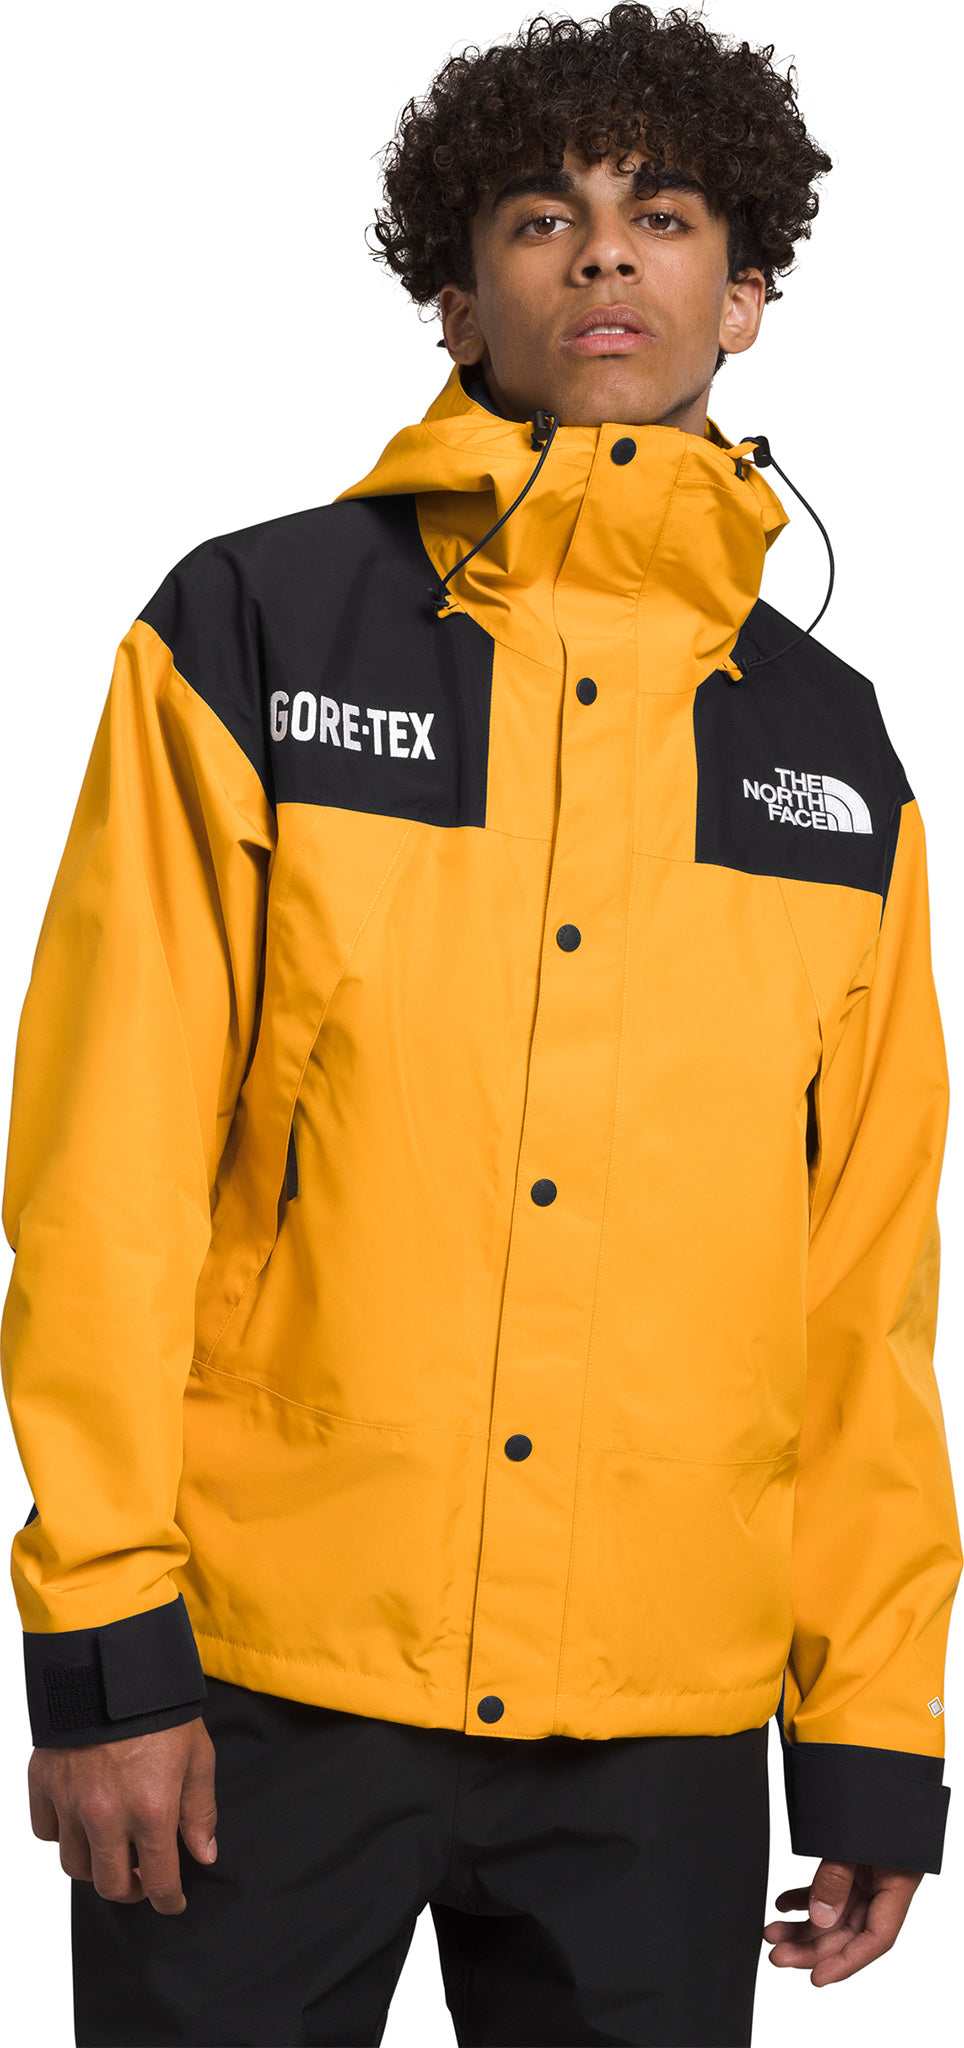 The North Face Mountain Peaks Jacket Mens XL Full Zip Fleece *Company Print  | eBay